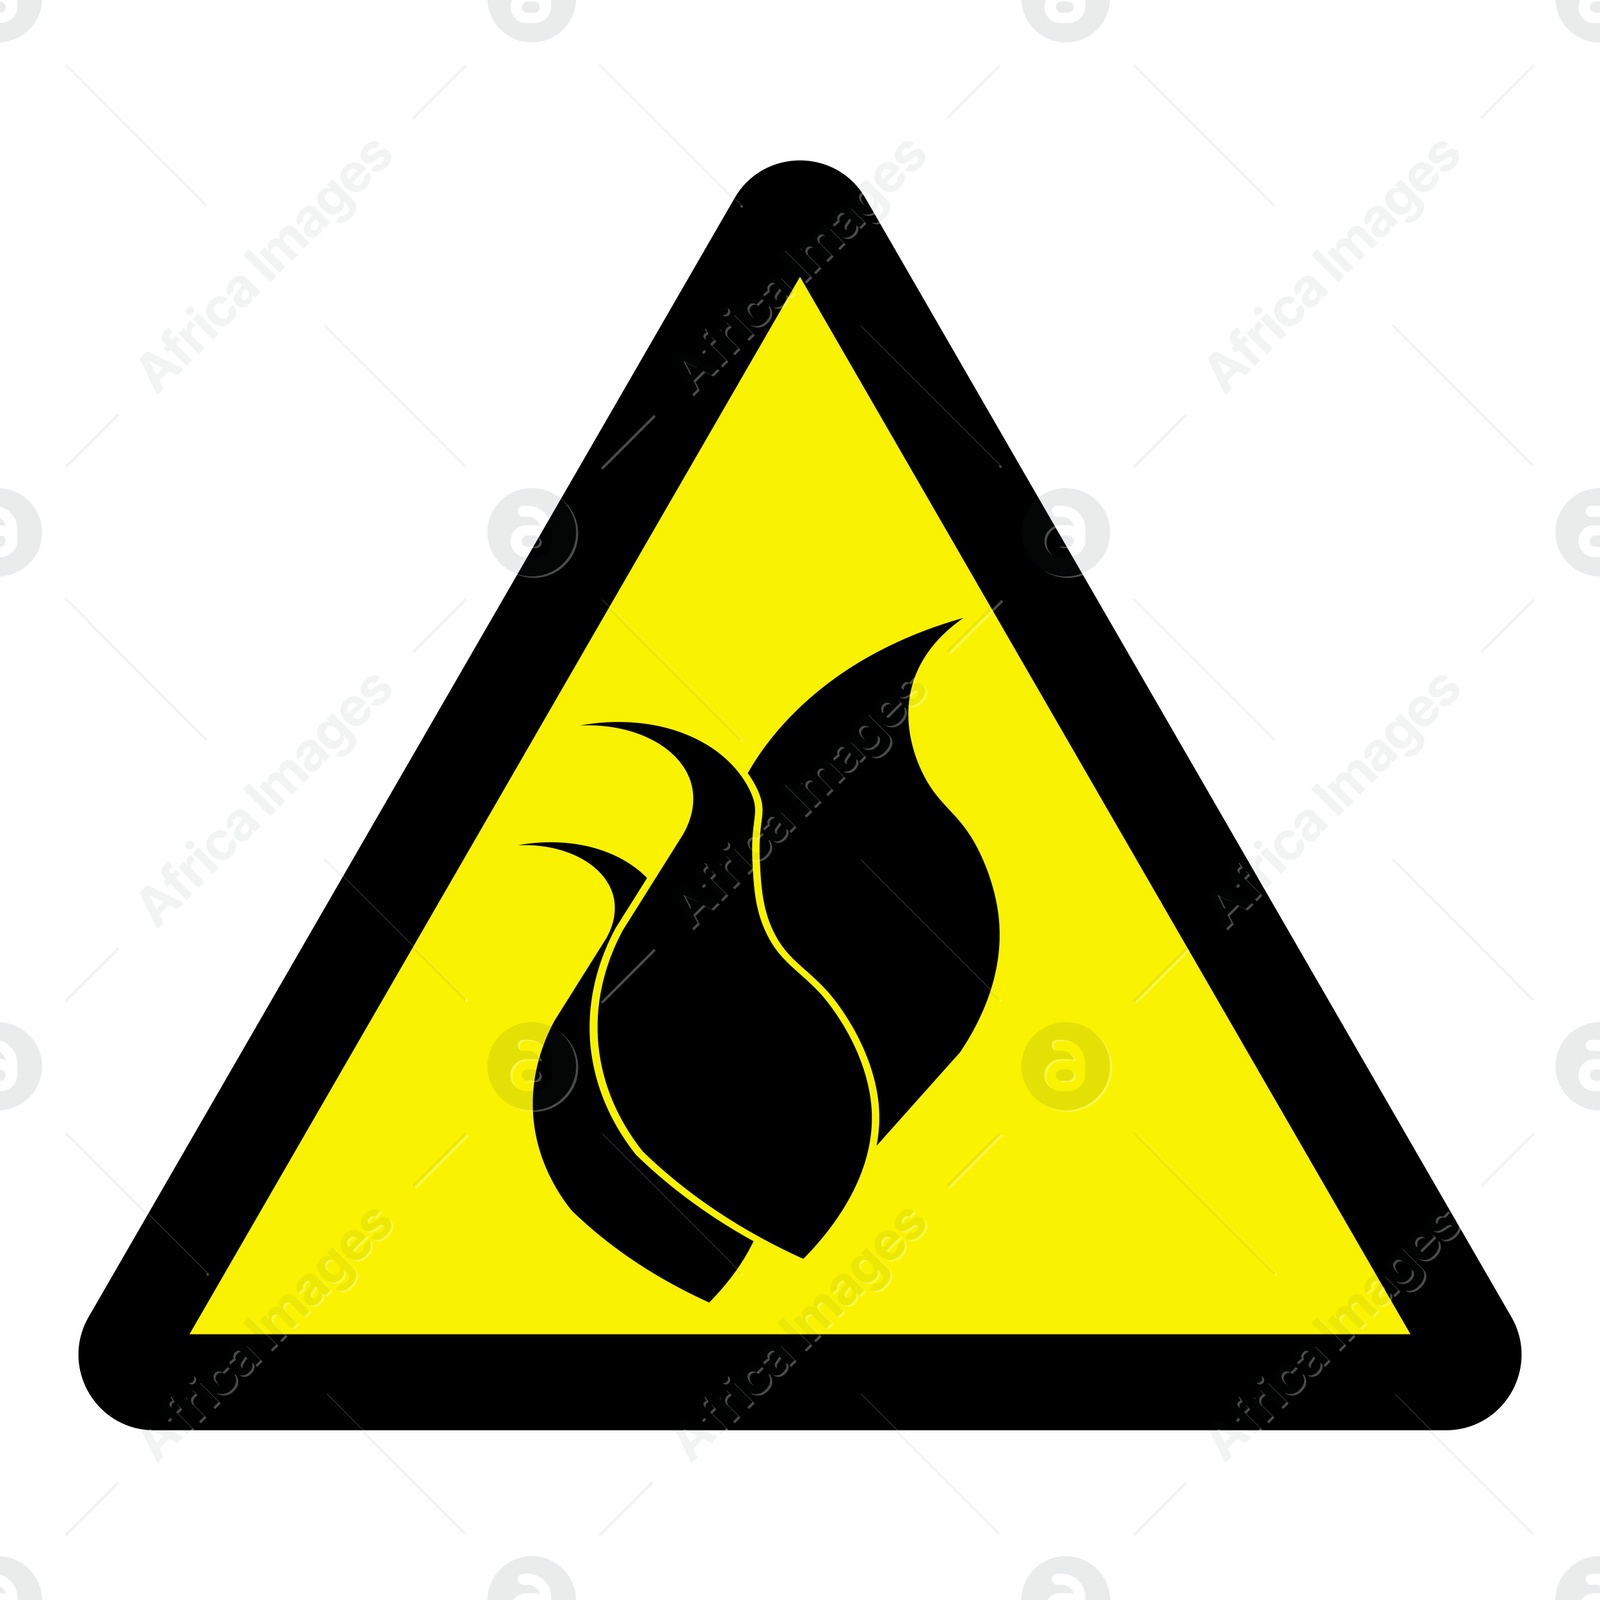 Image of International Maritime Organization (IMO) sign, illustration. Danger fire risk